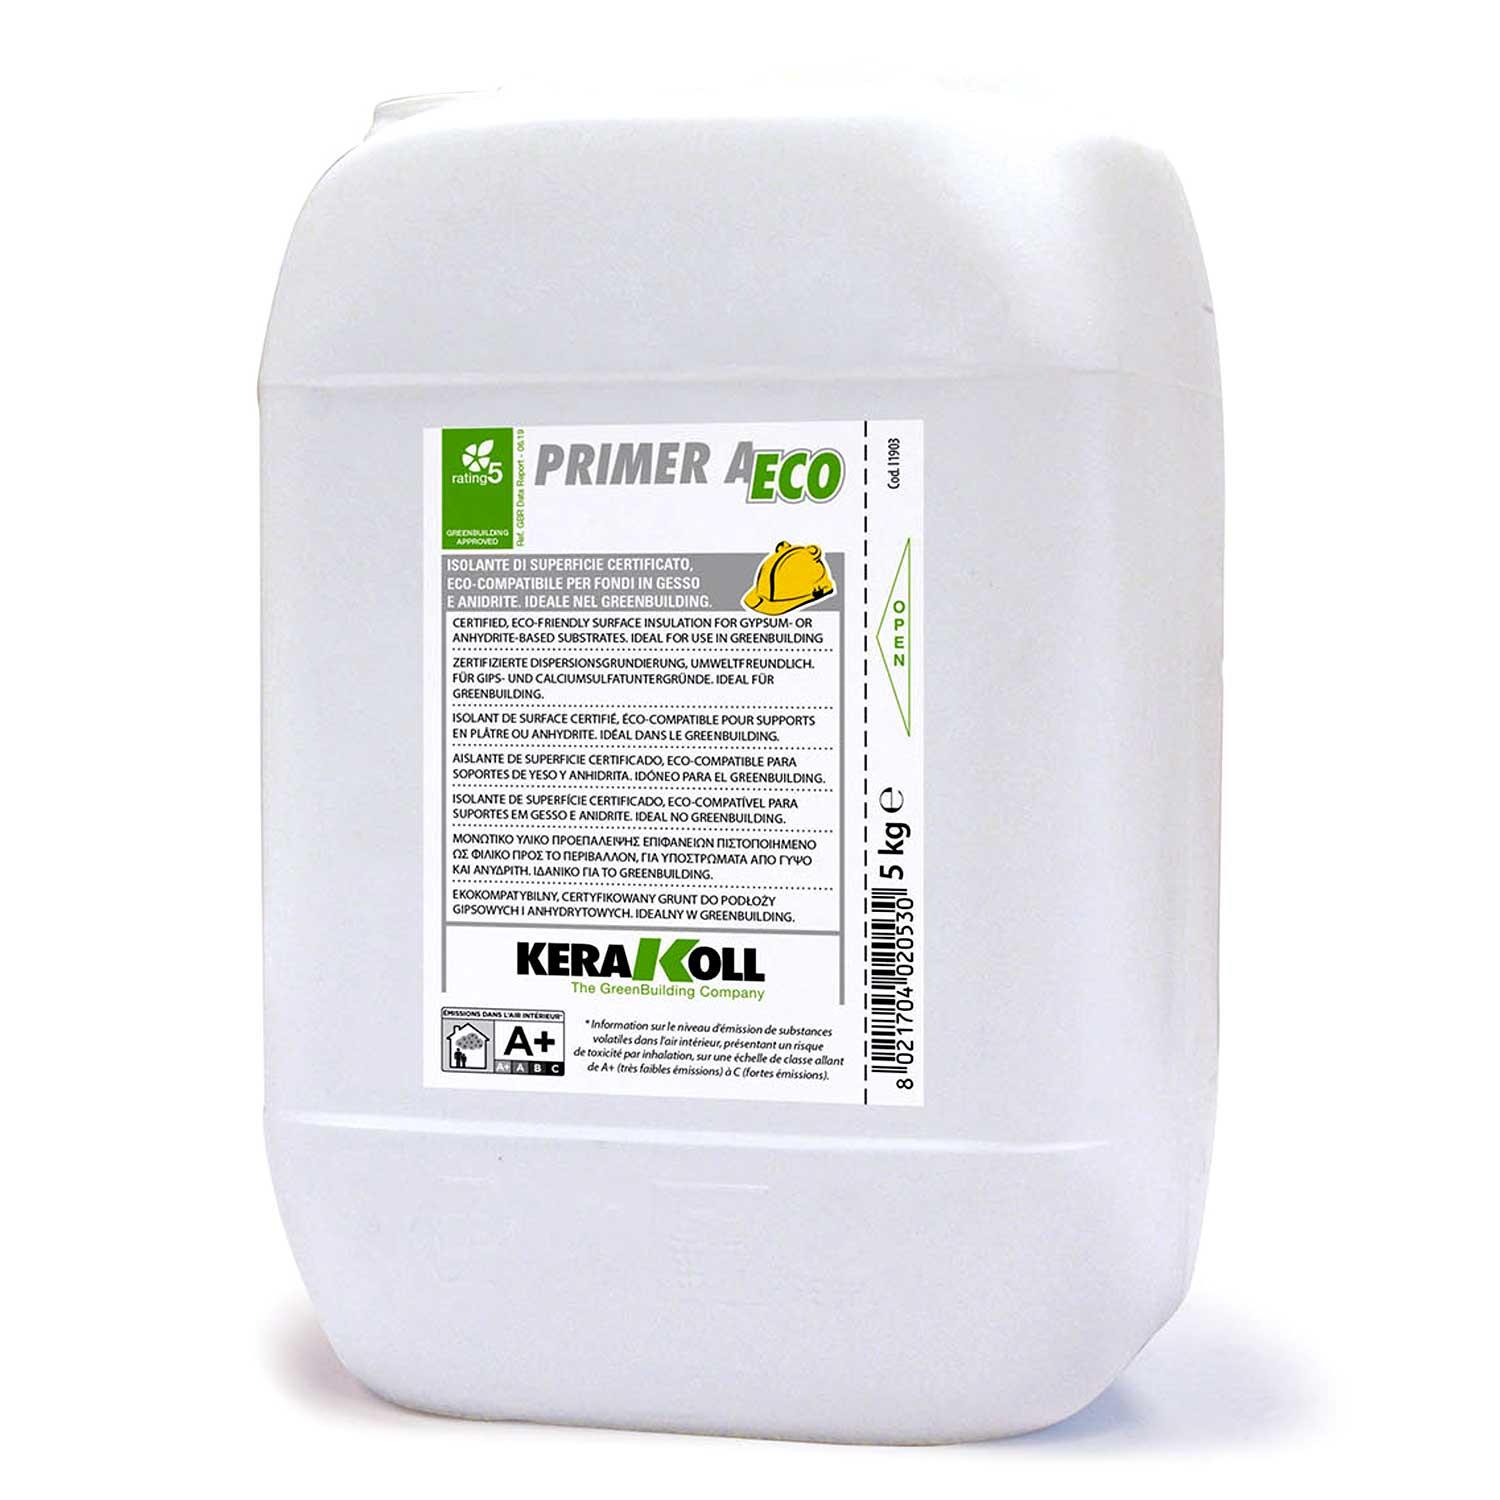 Kerakoll Primer A Eco 5kg Water-Based Primer